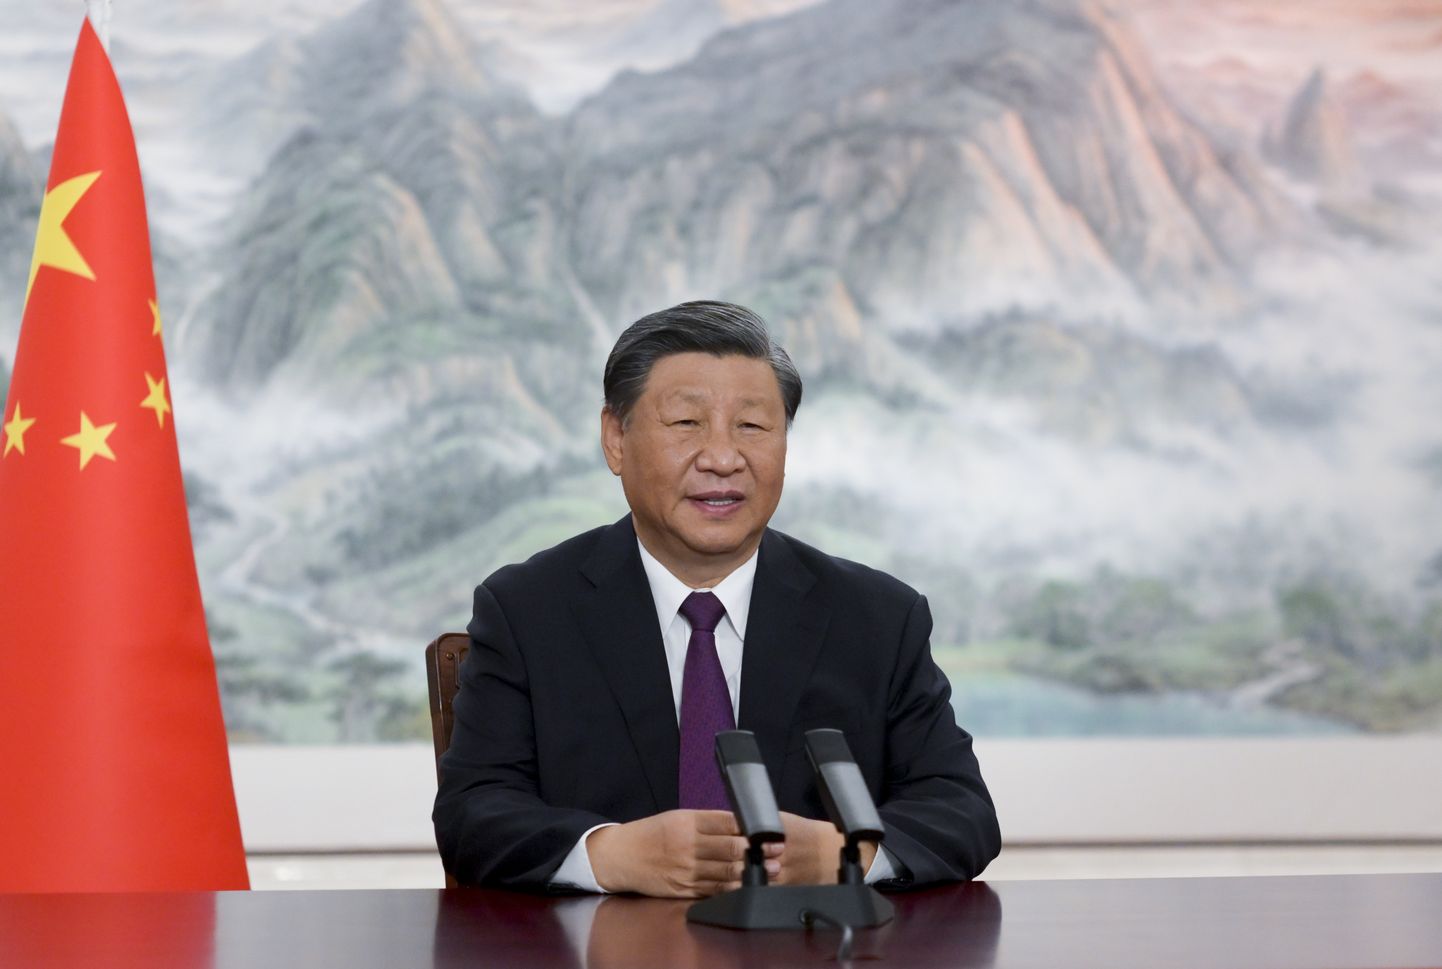 Hiina president Xi Jinping